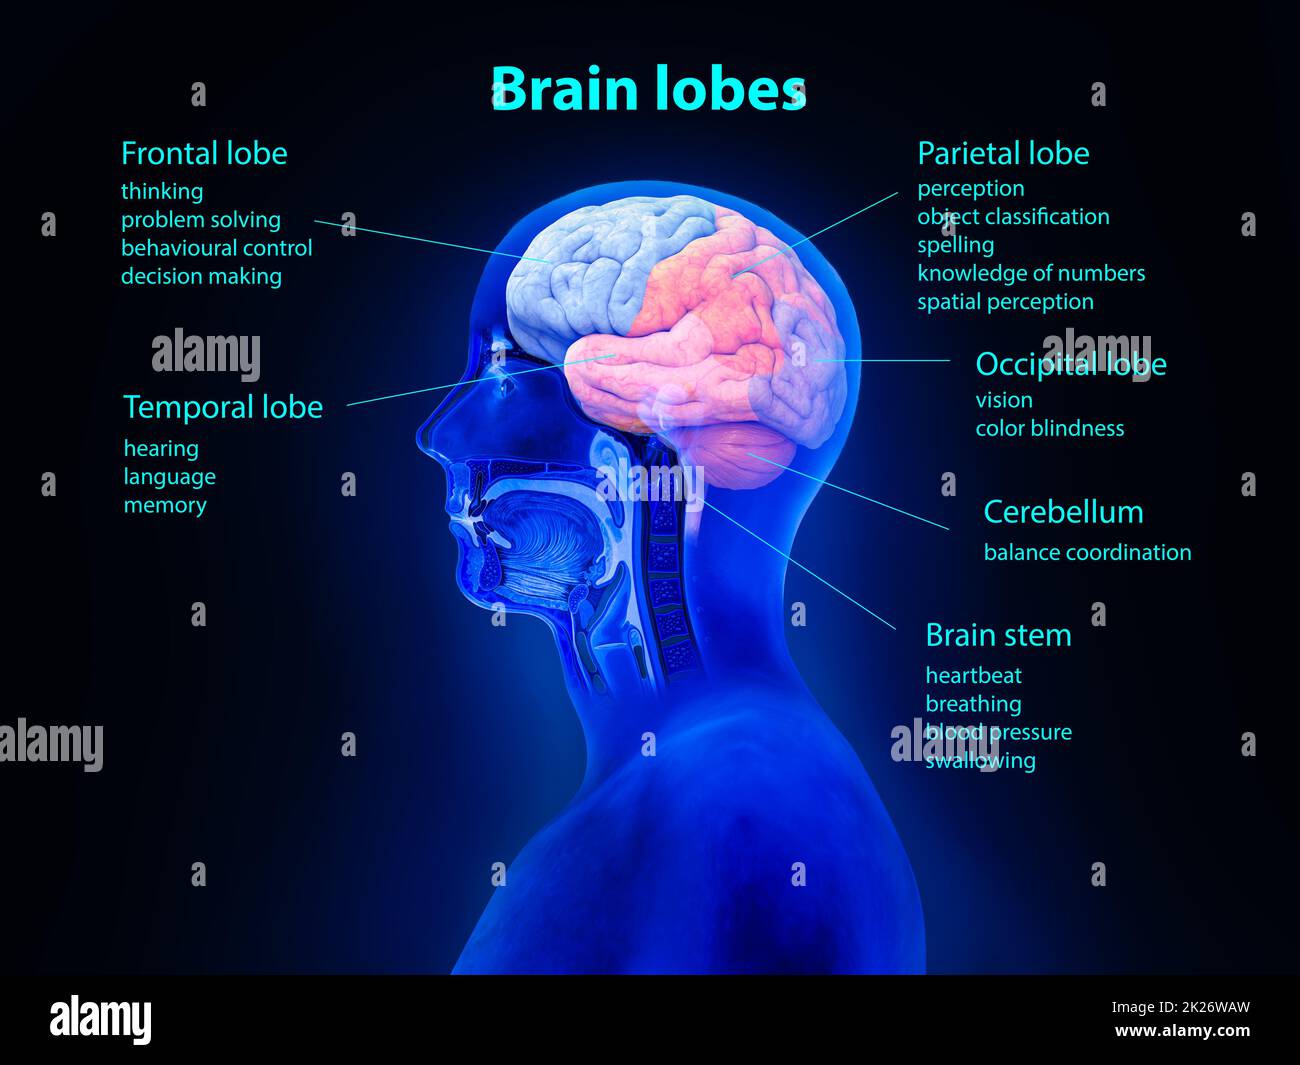 Brain Anatomy concept. Brain lobes, vision, digital human brain. Neural network. IQ testing, artificial intelligence virtual emulation science technology concept. Brainstorm think idea. 3D render Stock Photo